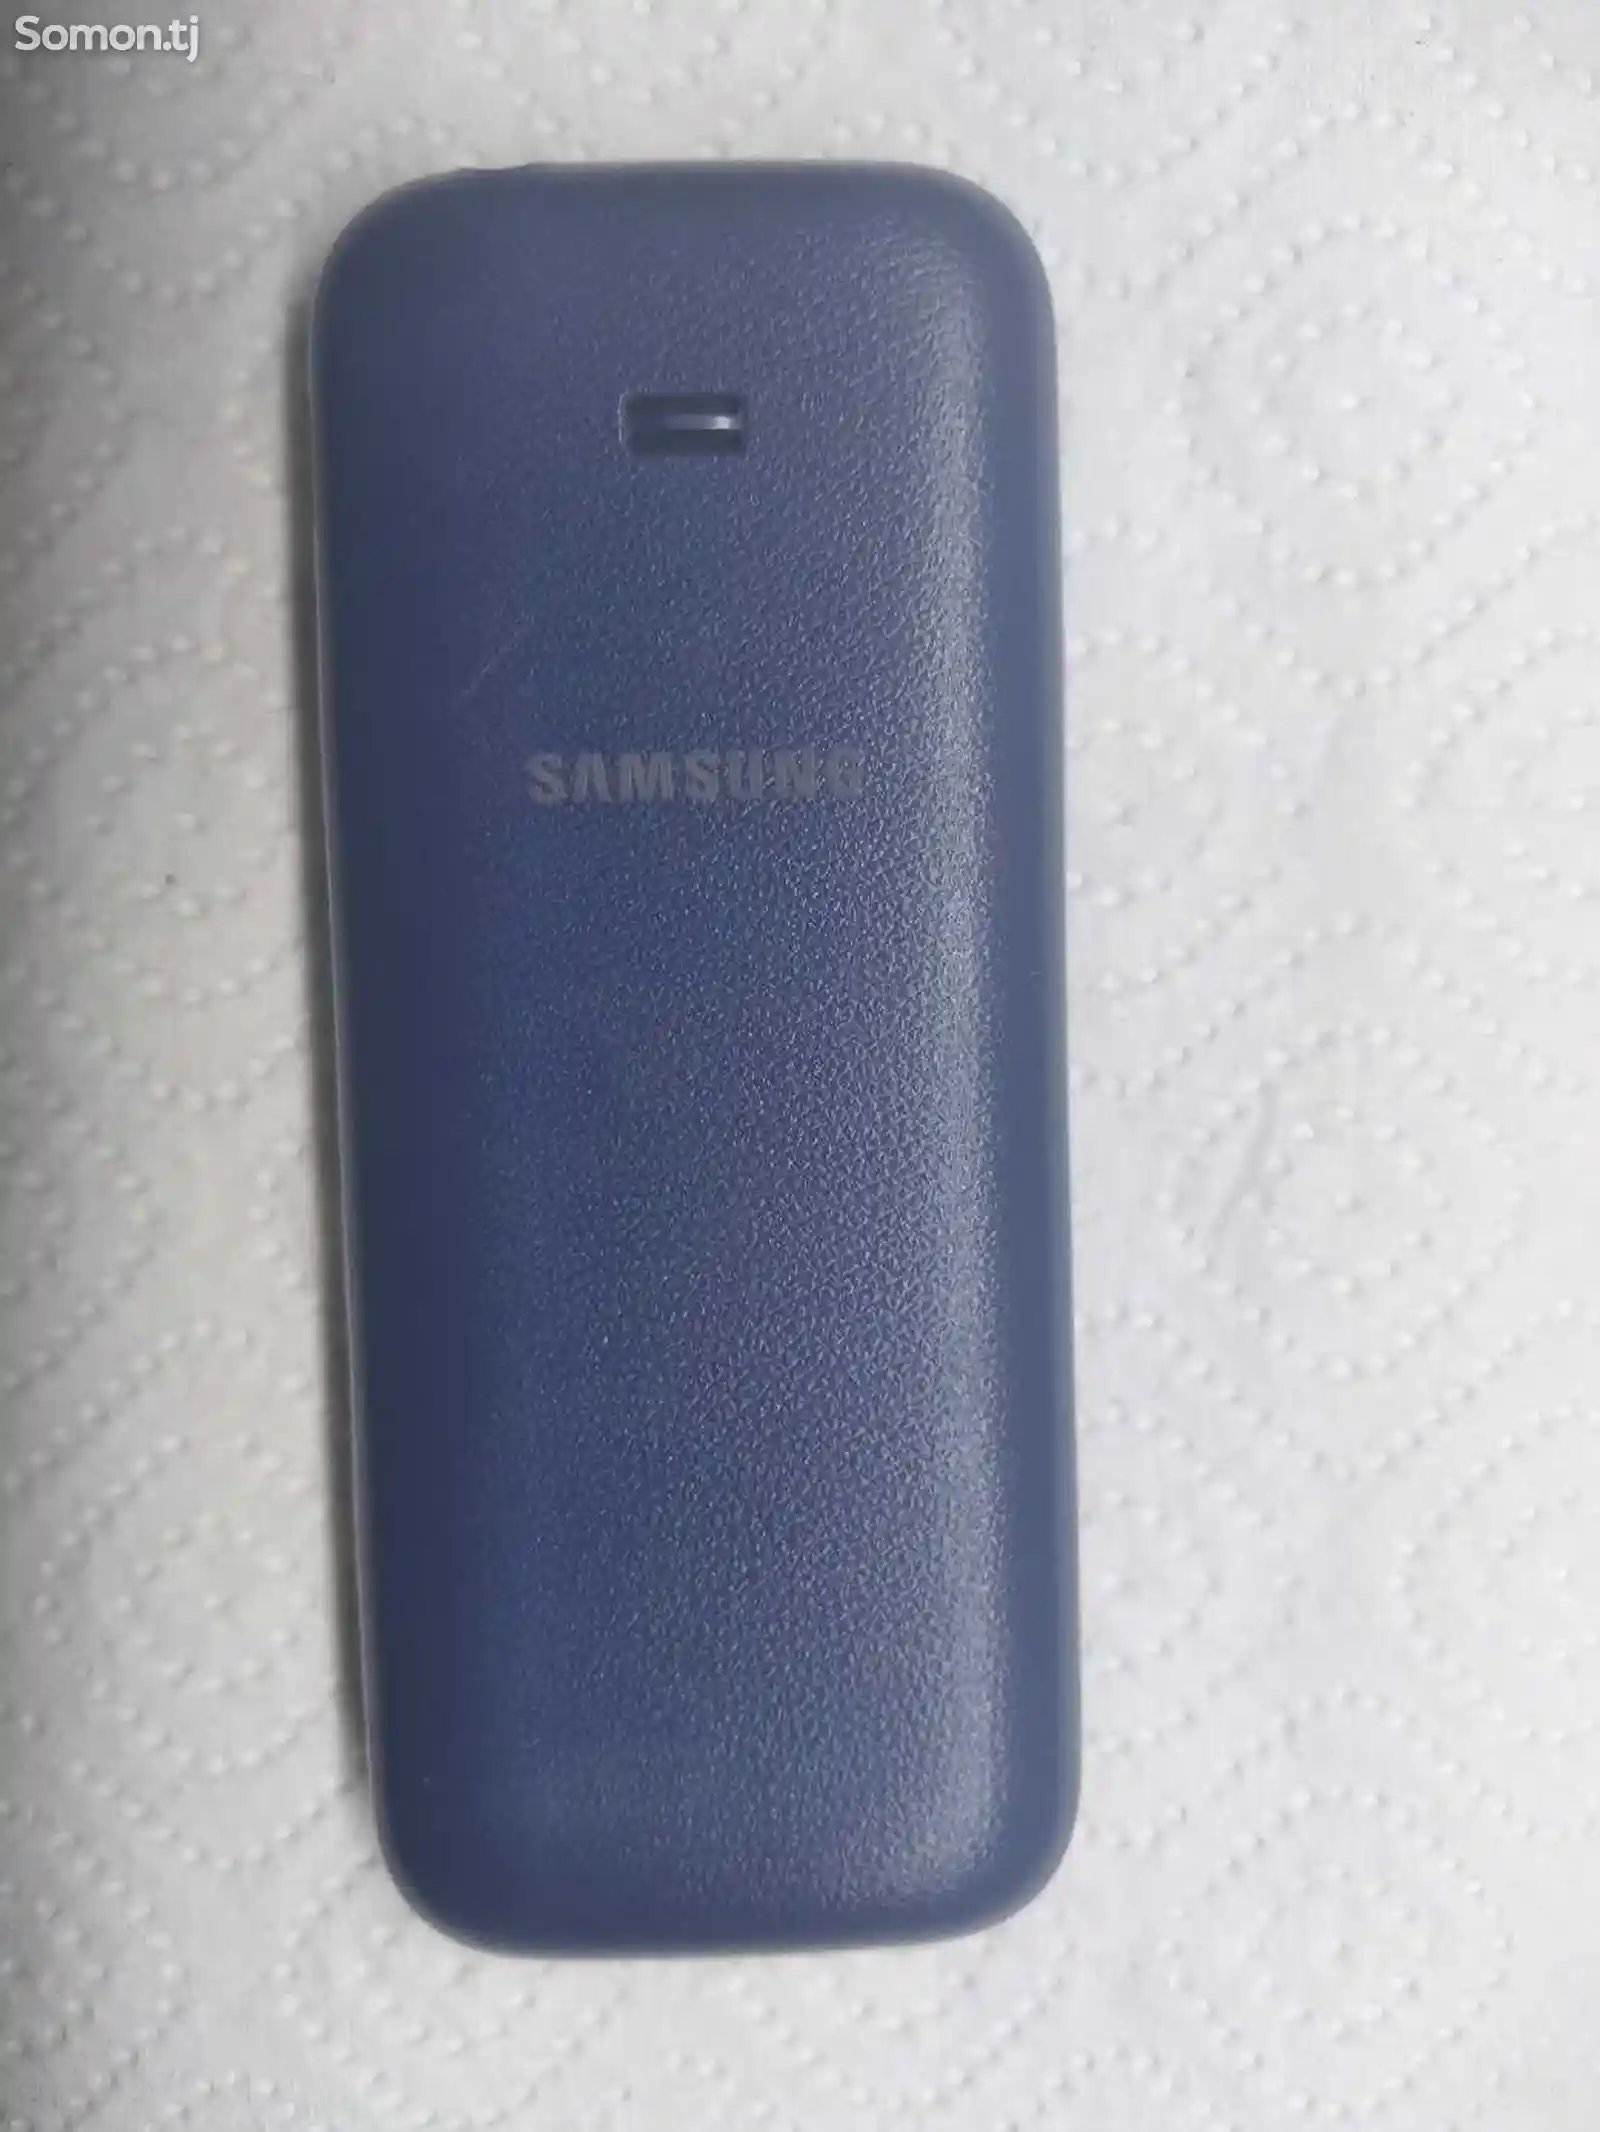 Samsung 315-2